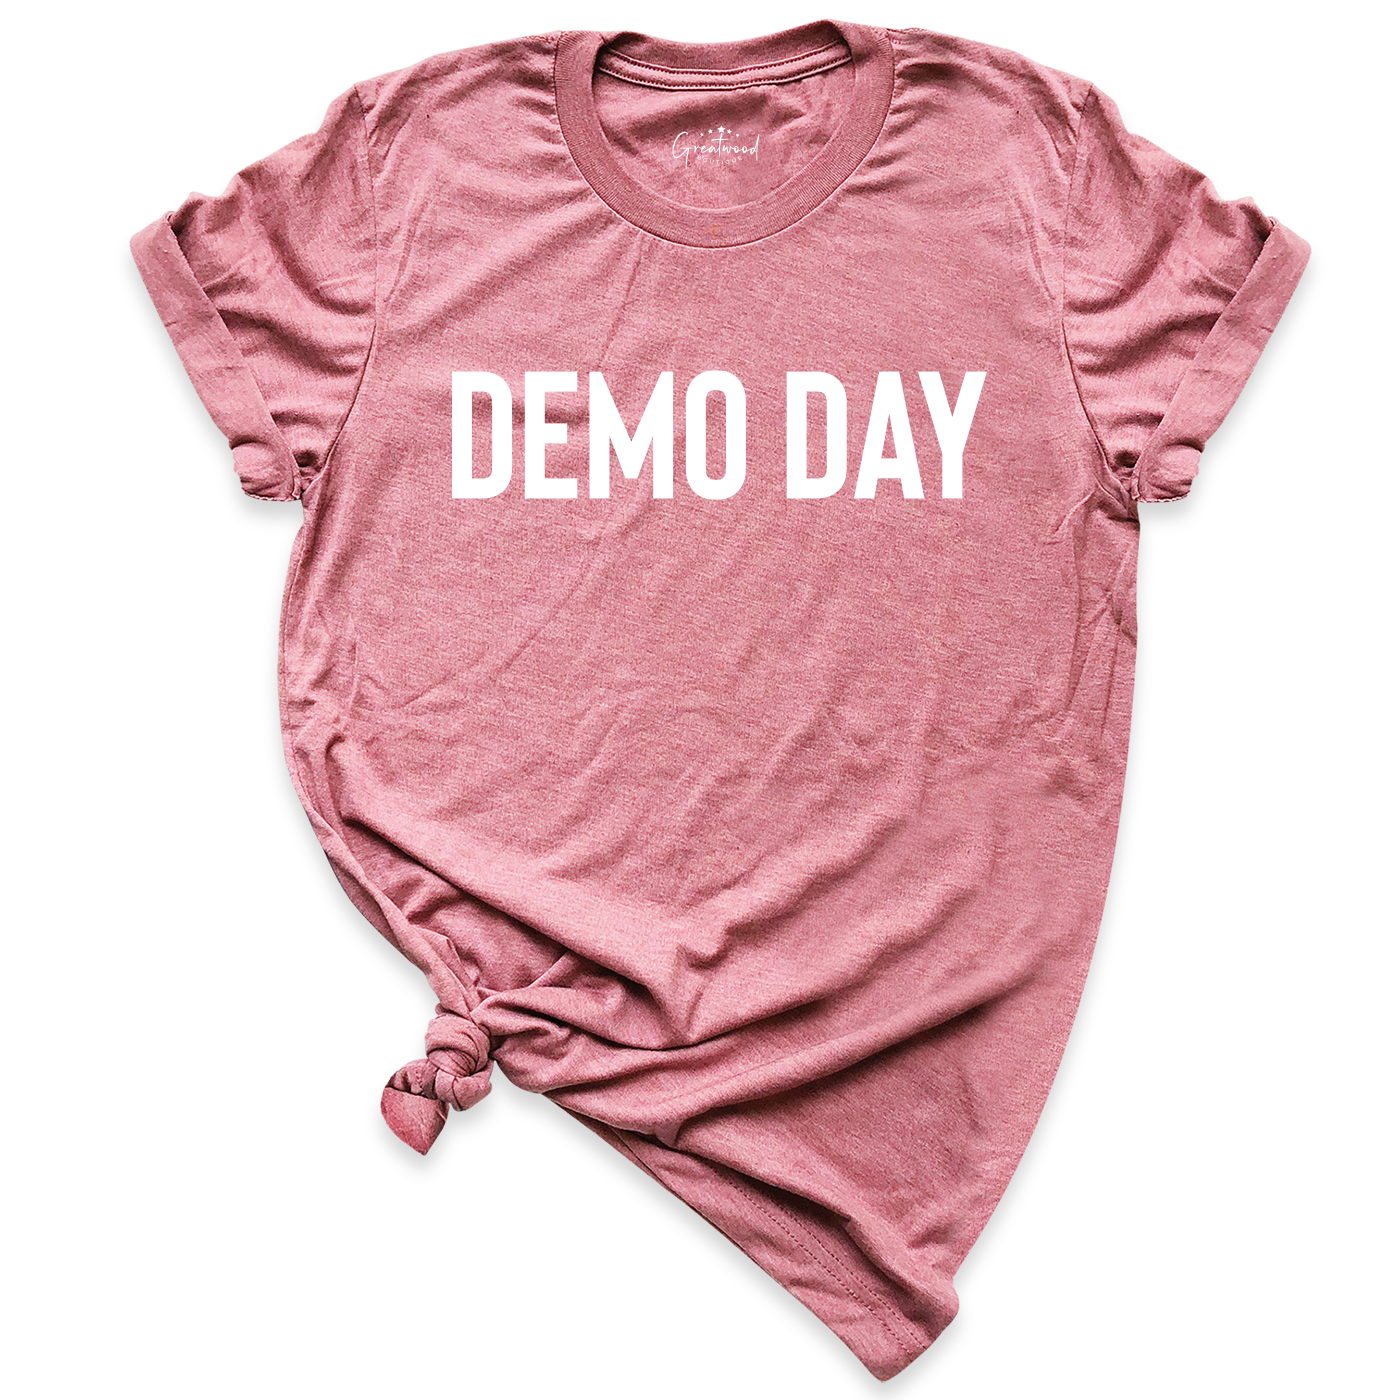 Demo Day Shirt